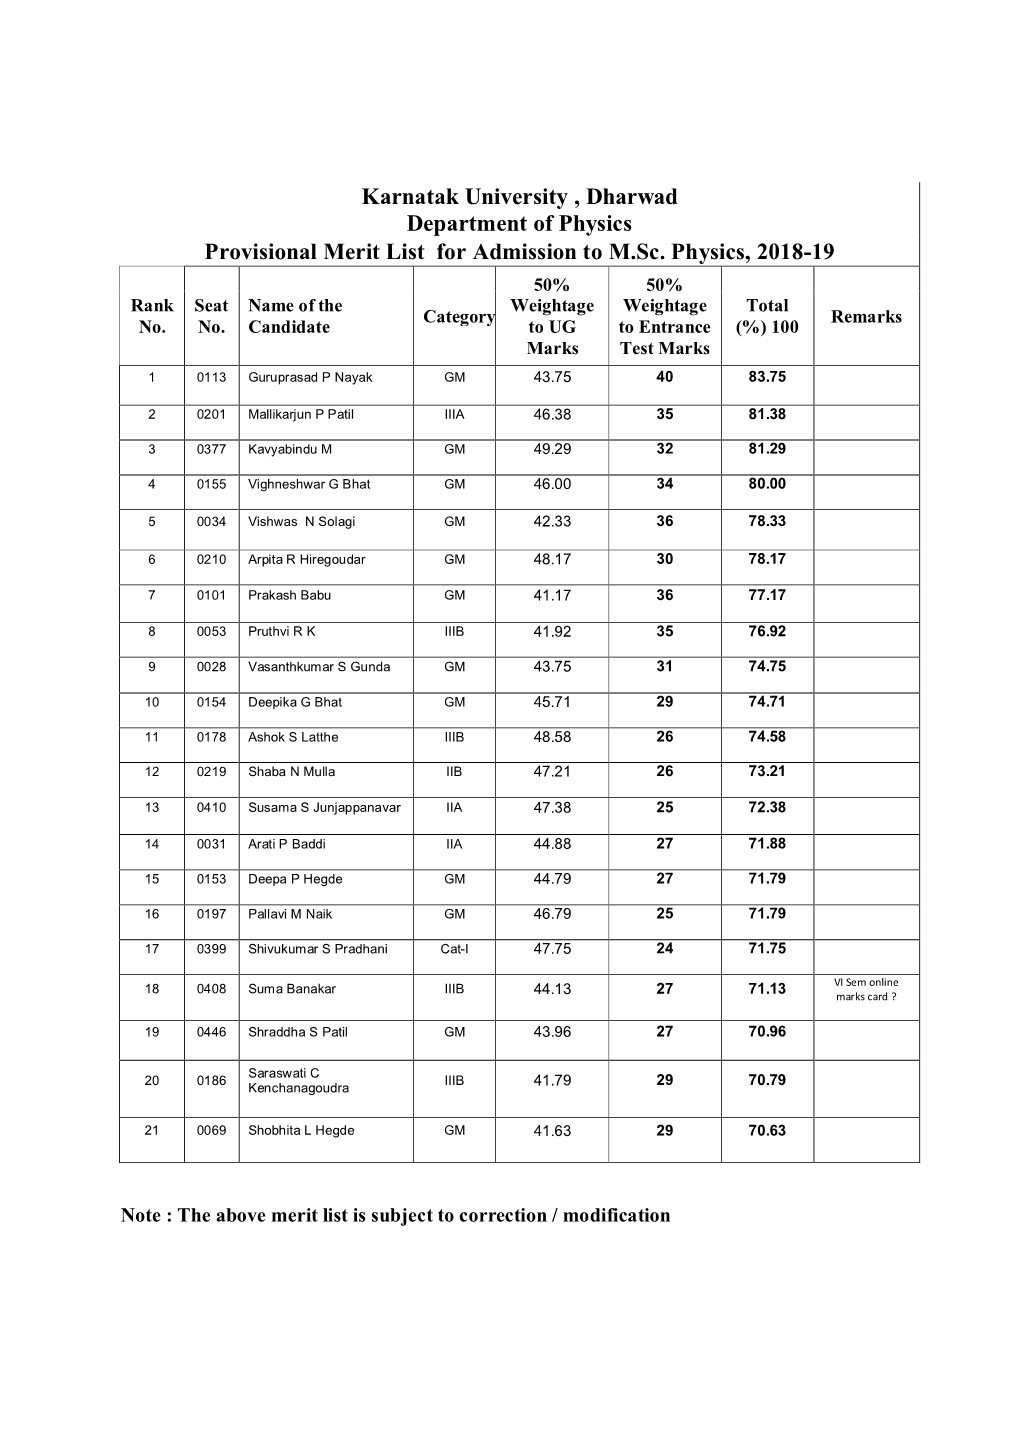 Karnatak University , Dharwad Department of Physics Provisional Merit List for Admission to M.Sc. Physics, 2018-19